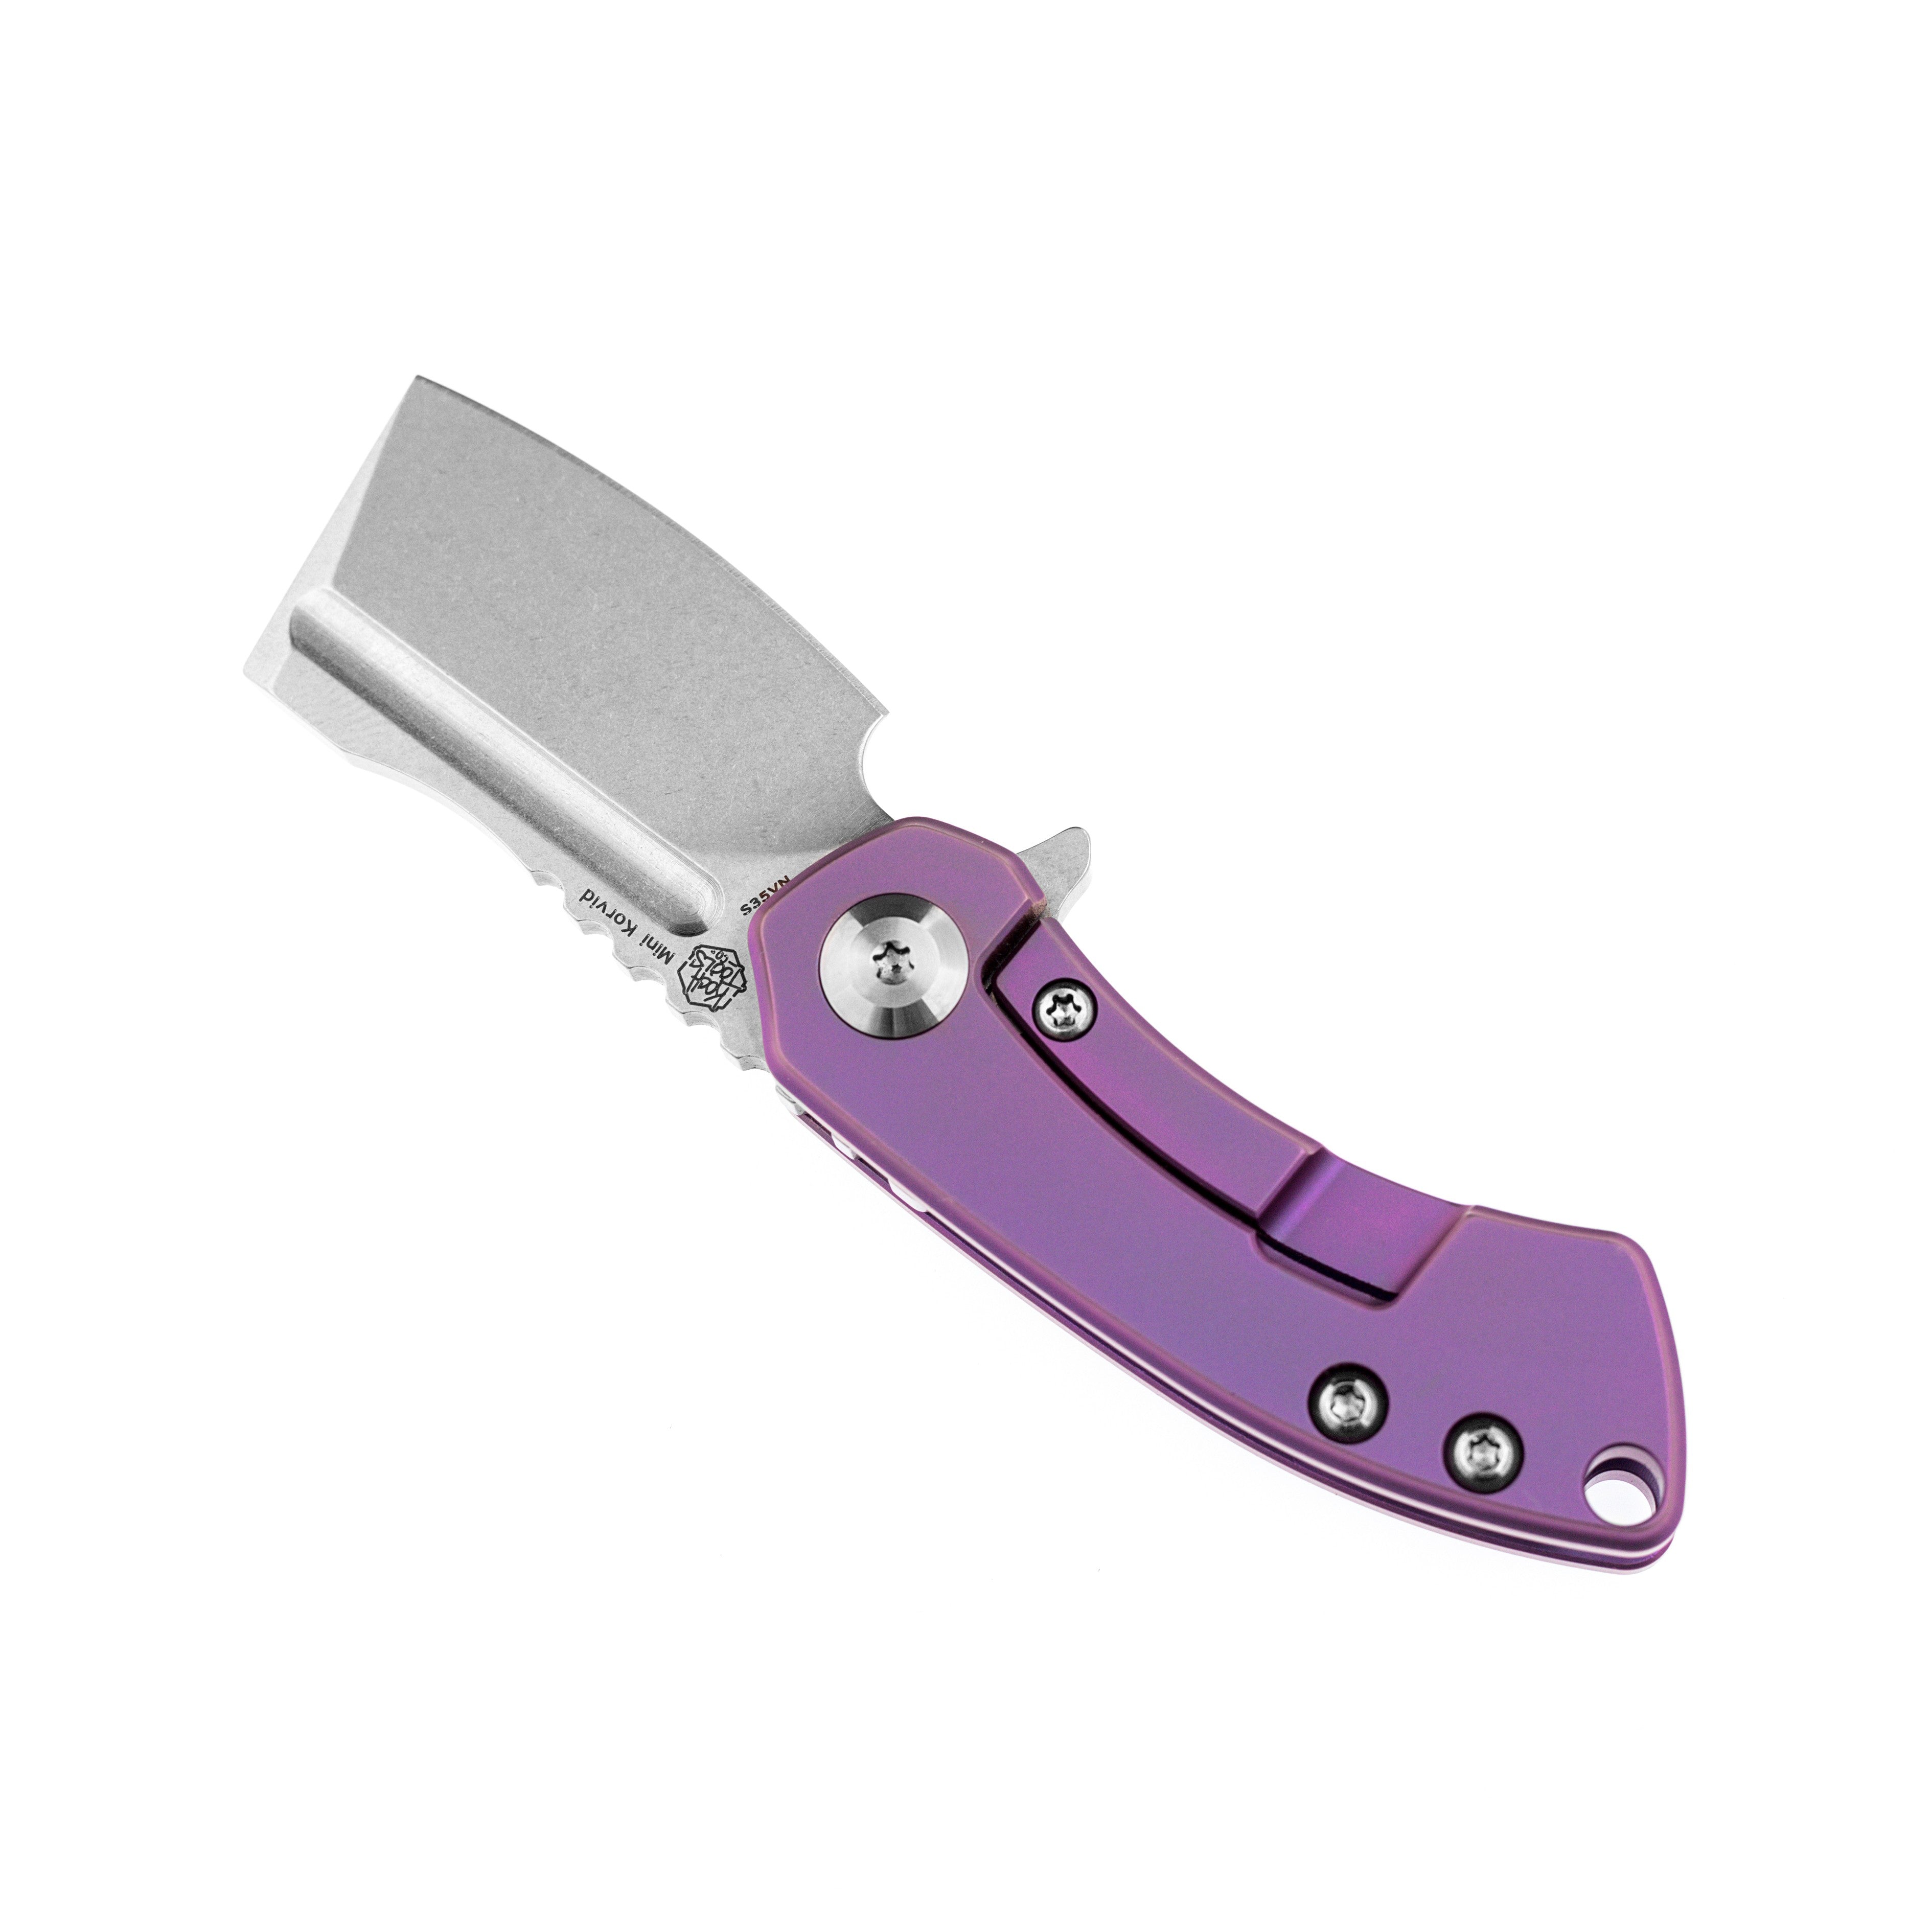 Kansept 刀具 Mini Korvid K3030A4 S35VN 刀片紫色钛手柄框架锁